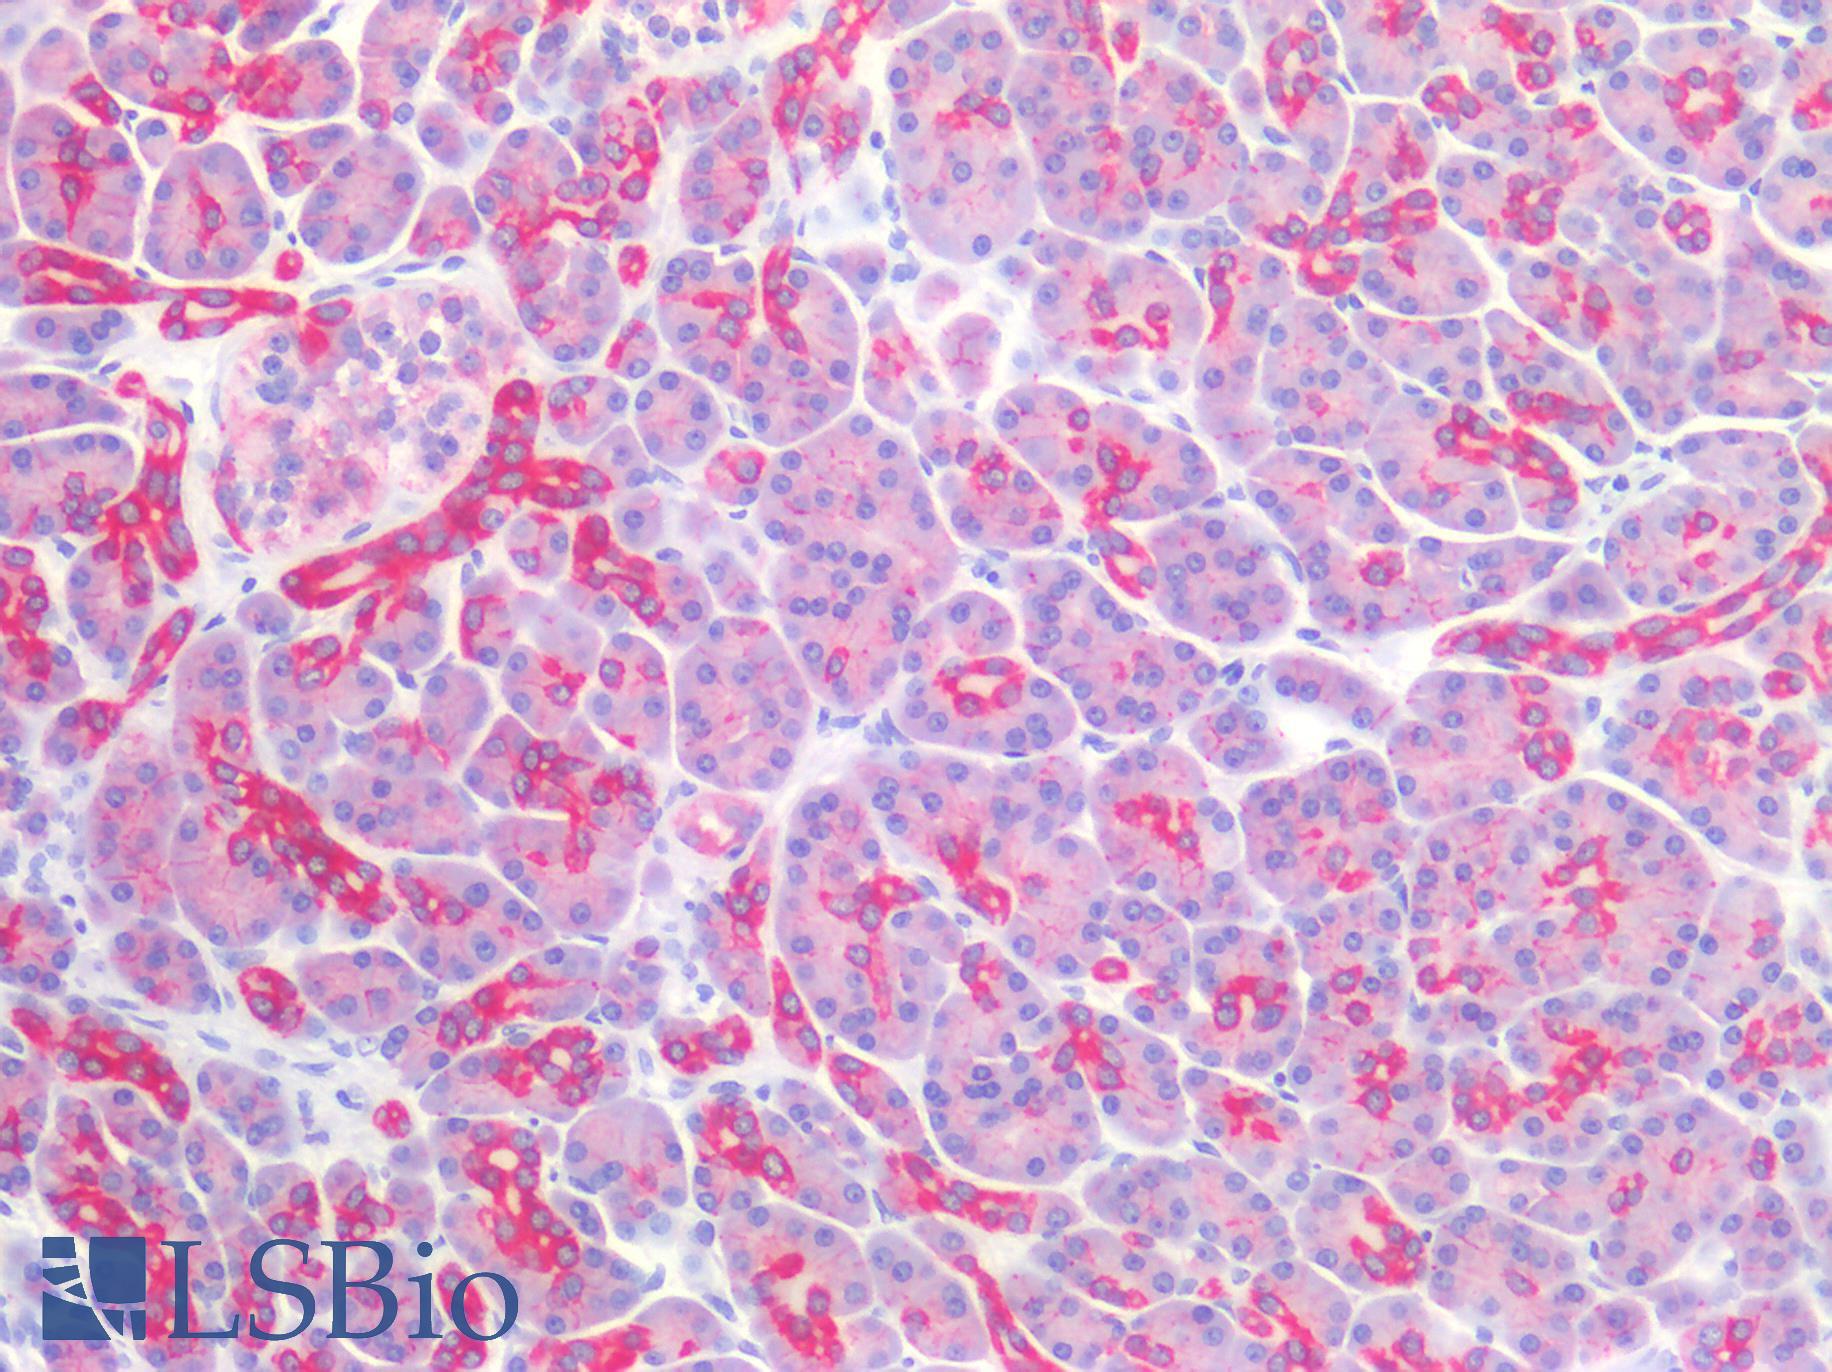 CLDN4 / Claudin 4 Antibody - Human Pancreas: Formalin-Fixed, Paraffin-Embedded (FFPE)